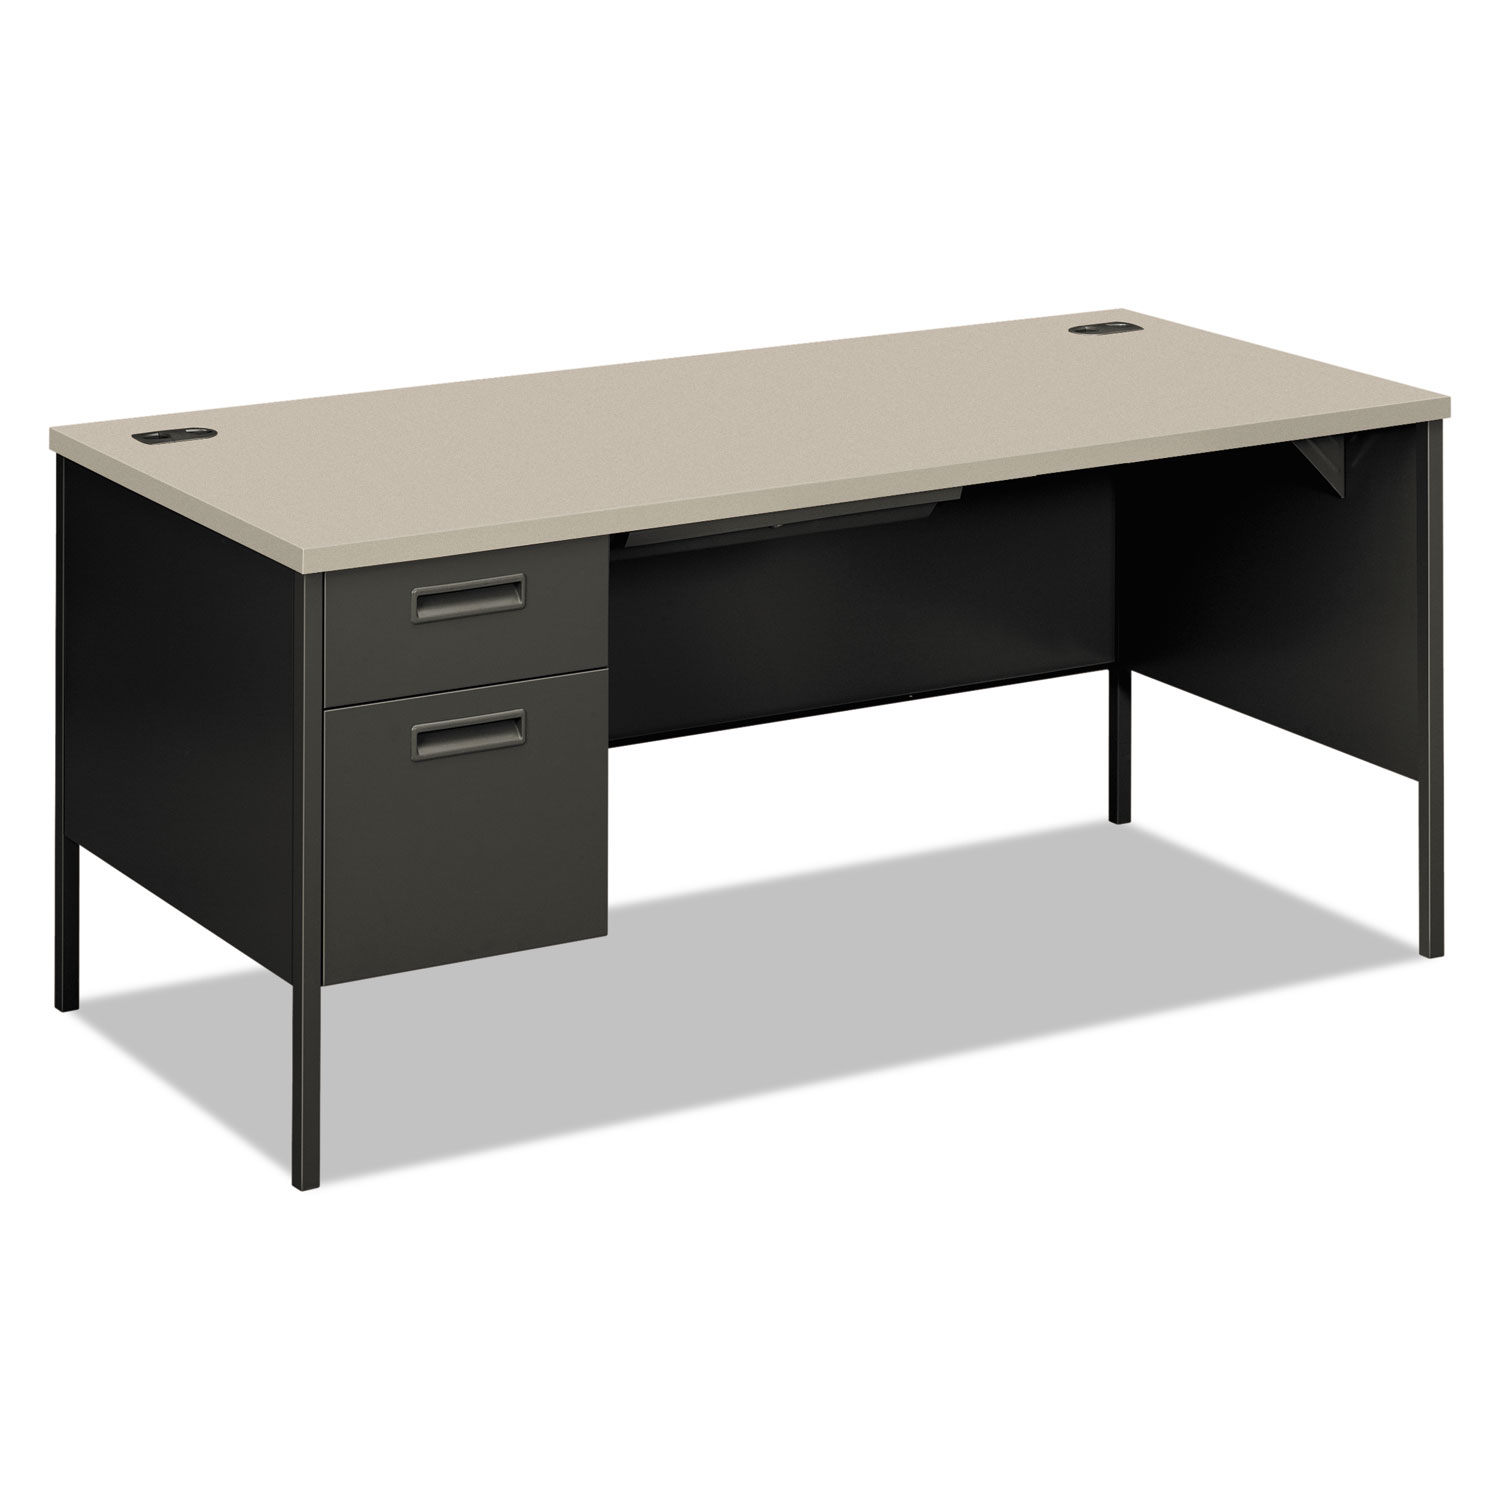 HON HONP3266LG2S Metro Classic Left Pedestal Desk, 66w x 30d, Gray Patterned/Charcoal